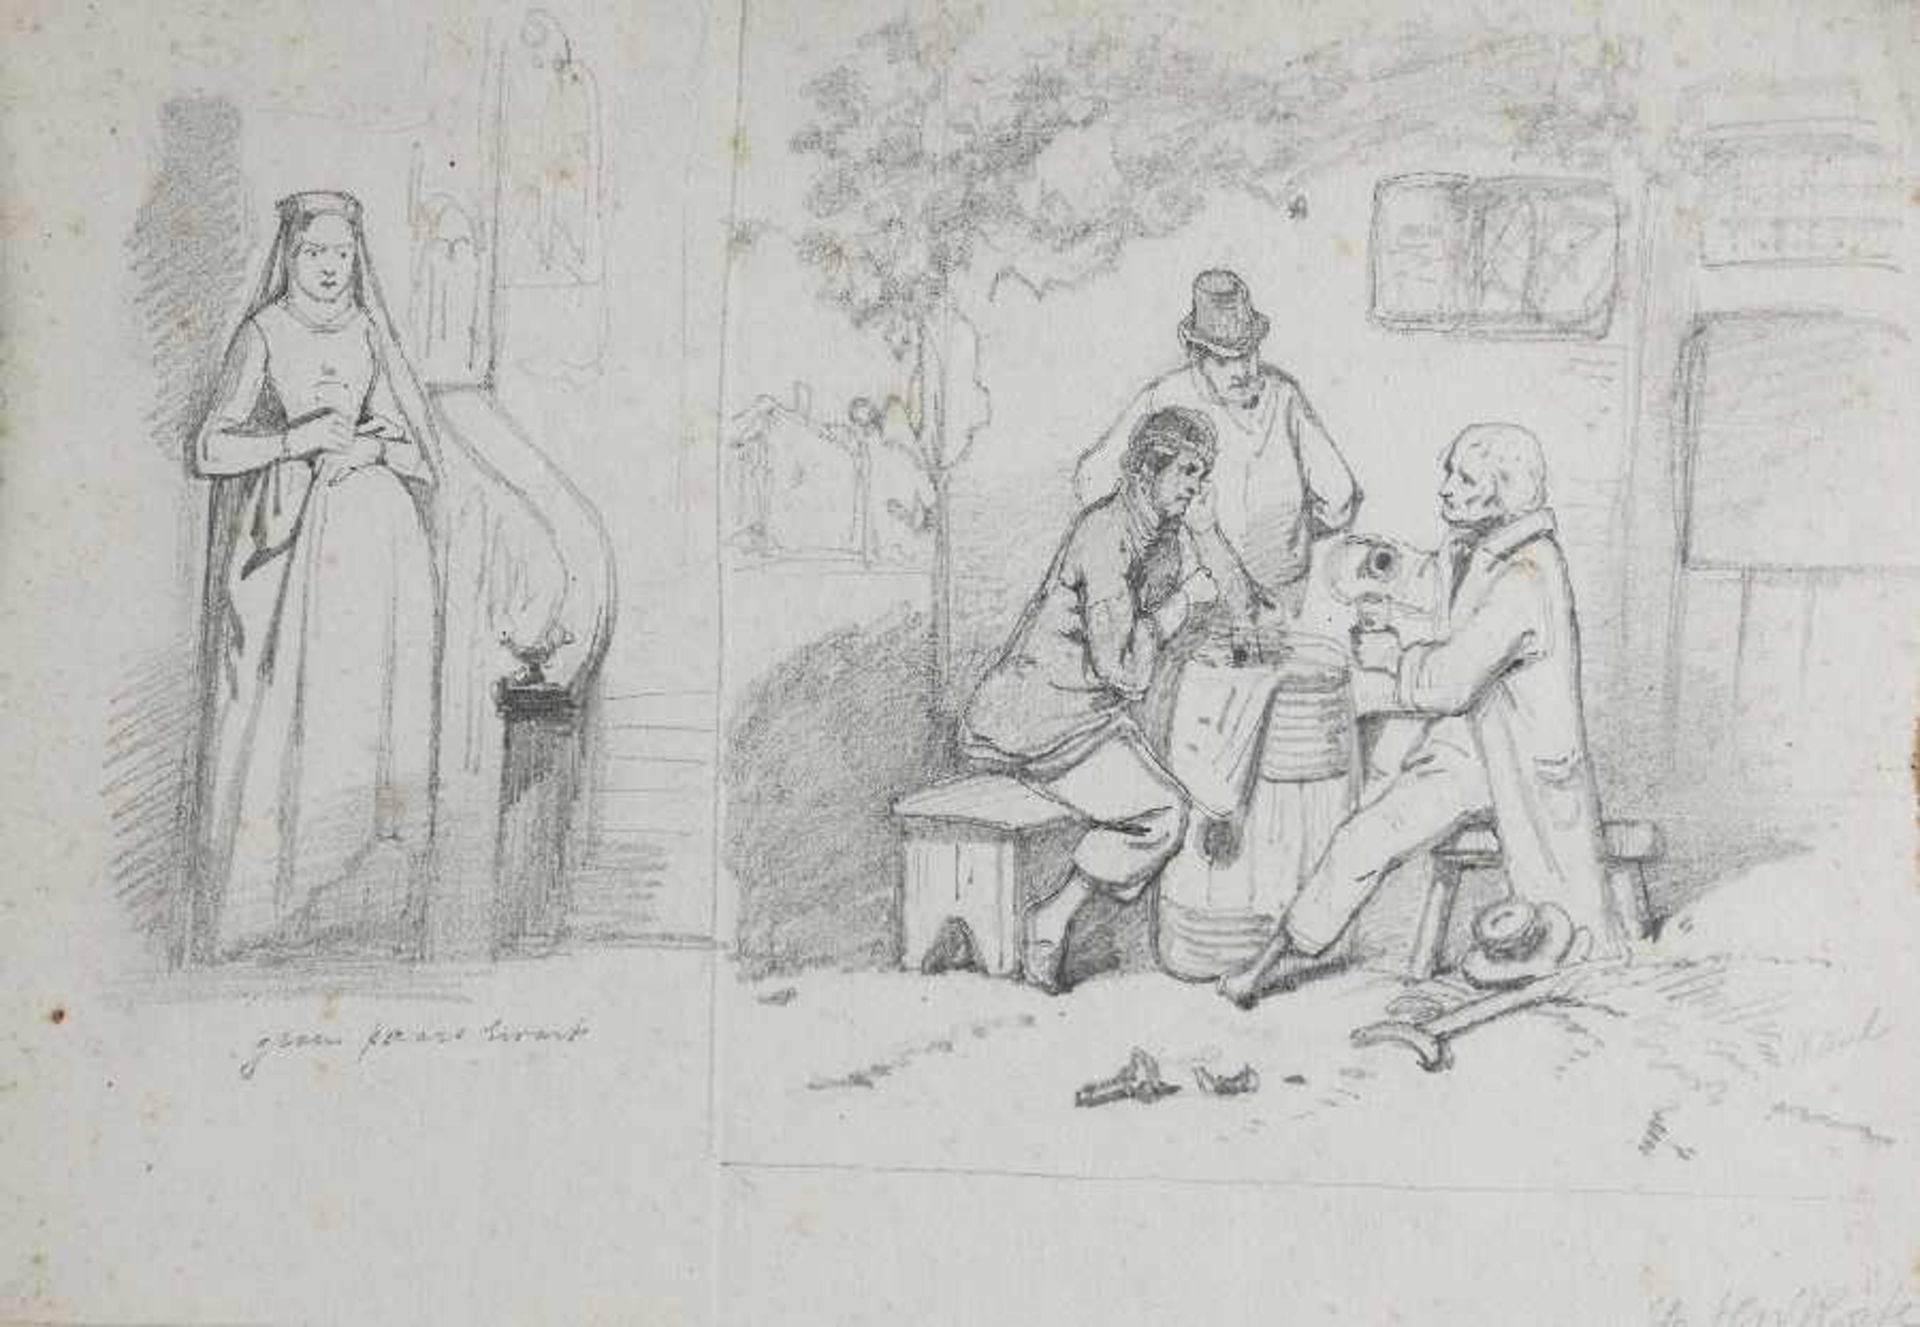 Johann Mari ten Kate1831 Den Haag - 1901 DriebergenCharakter studies et. al.12 pencil drawings on